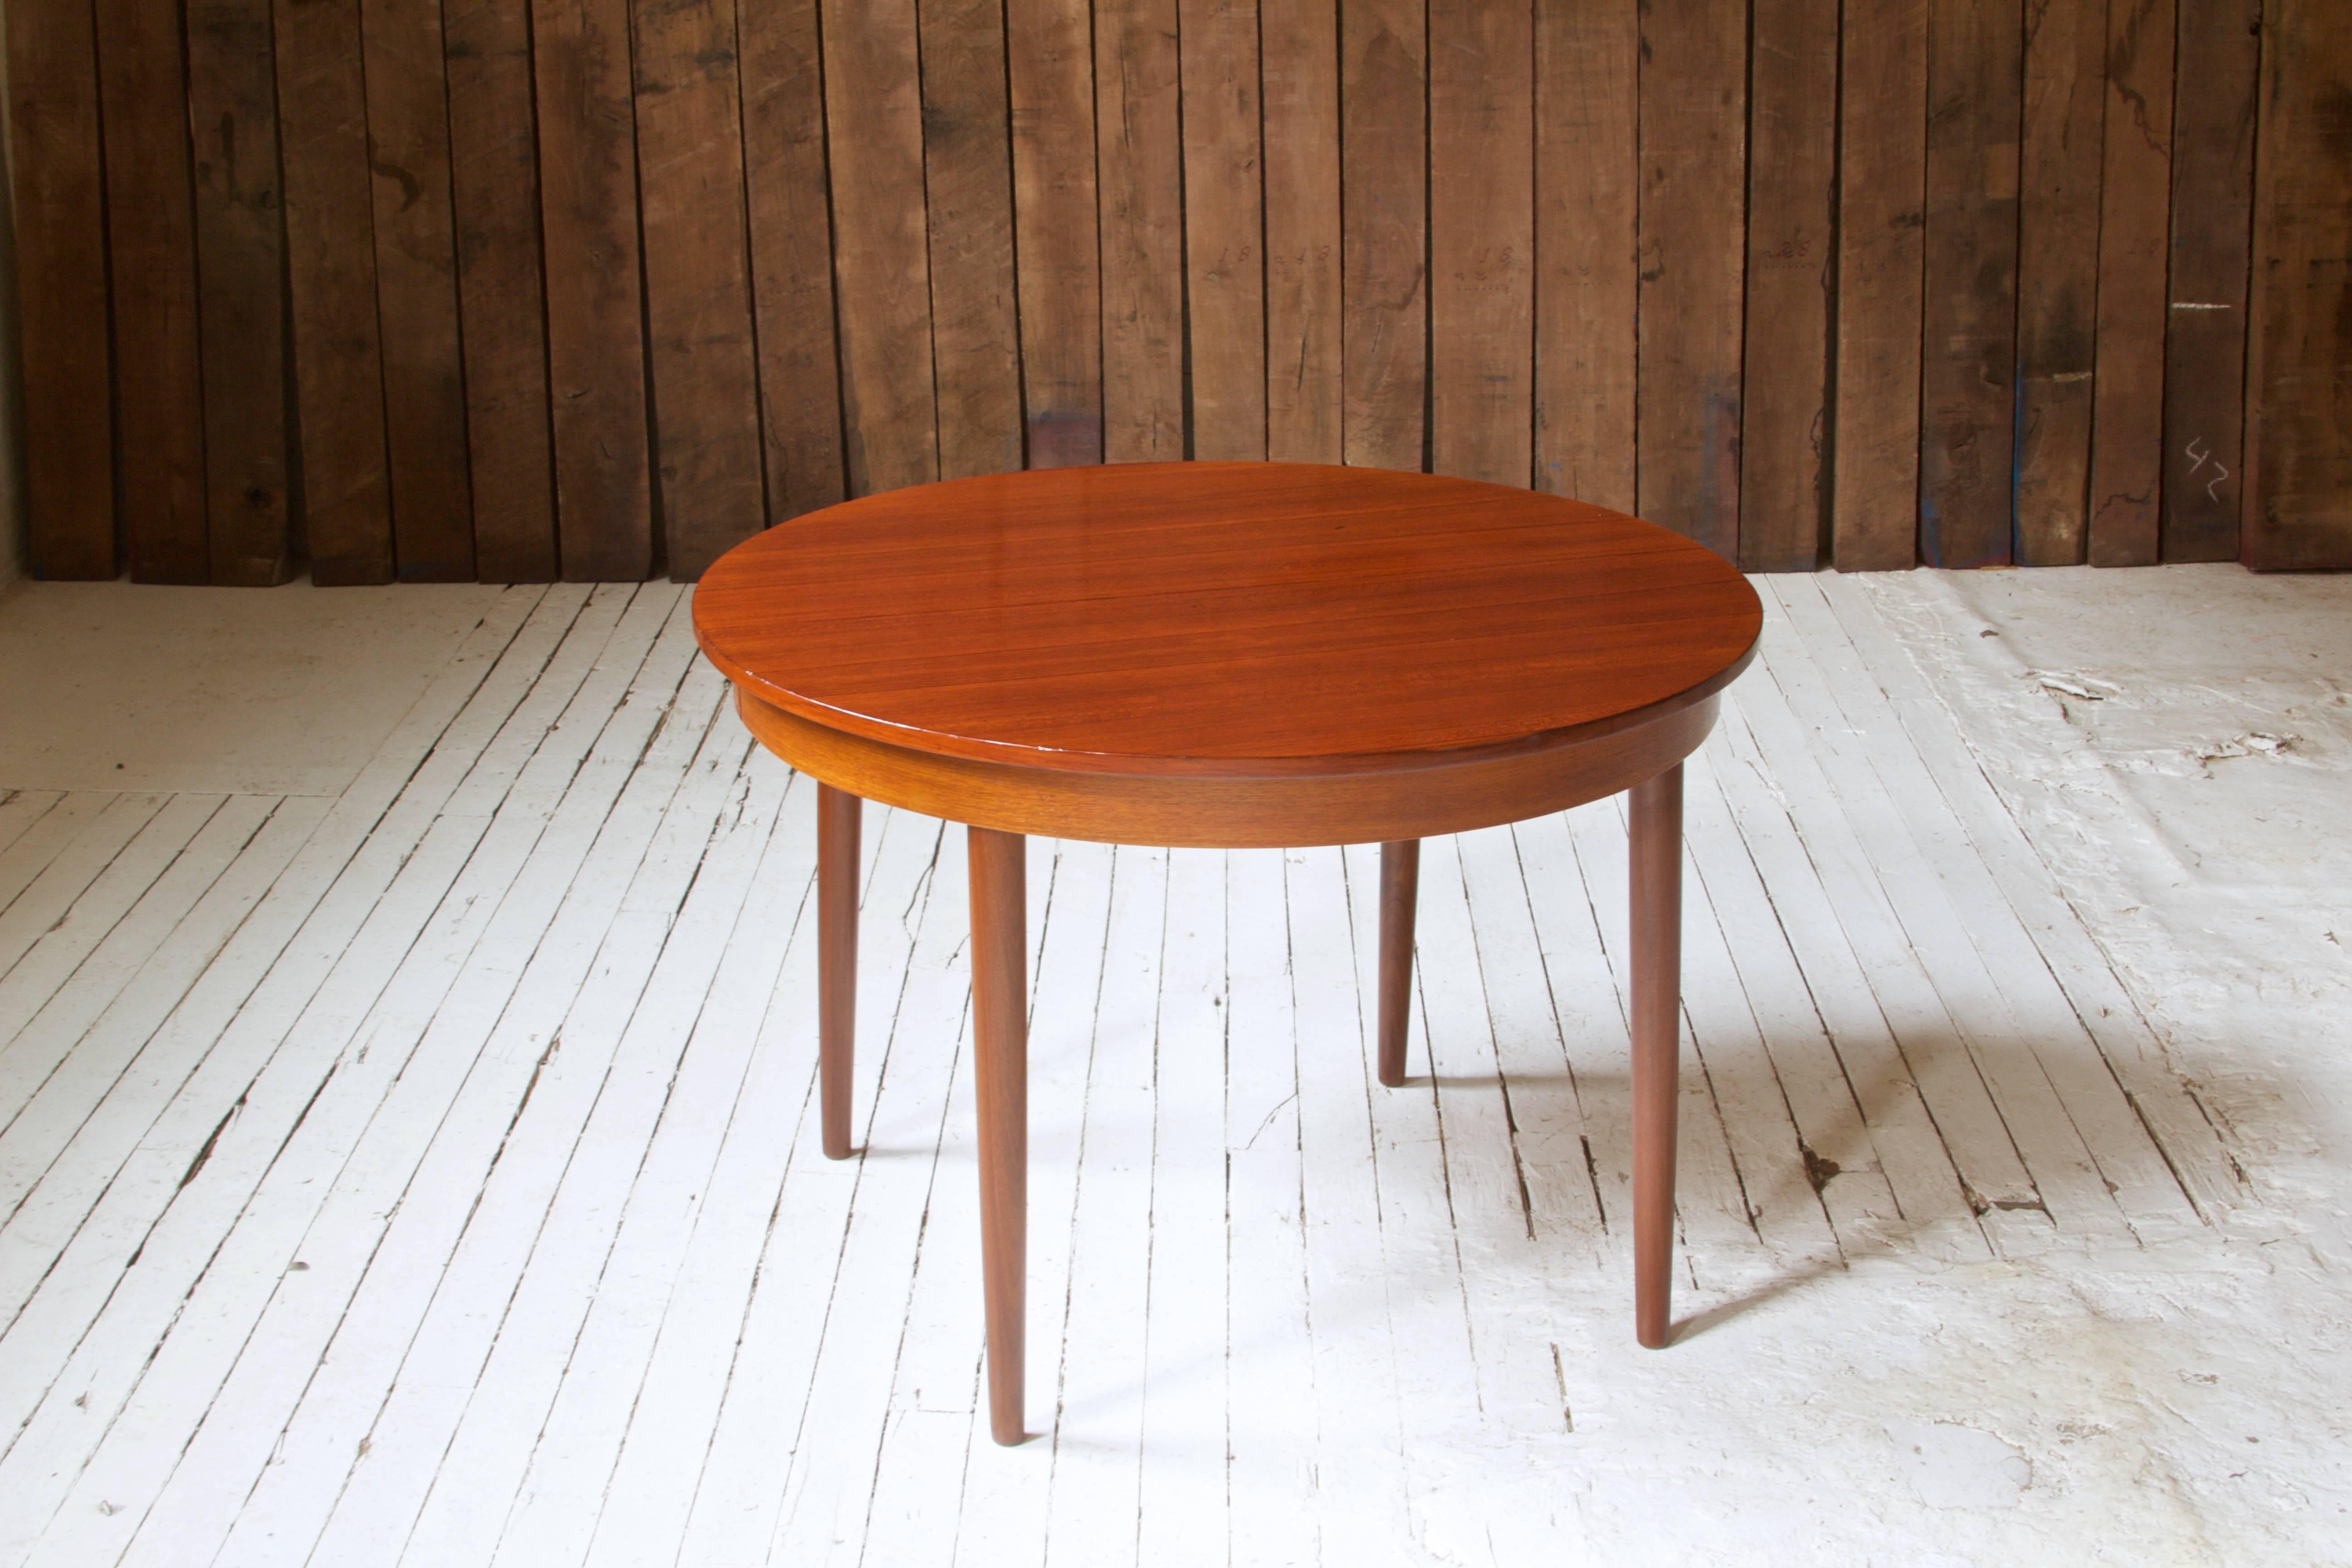 Lovely table by Hans Olsen for Frem Rojle with demountable legs and polished teak top. Manufacturer's mark to underside. Made in Denmark.